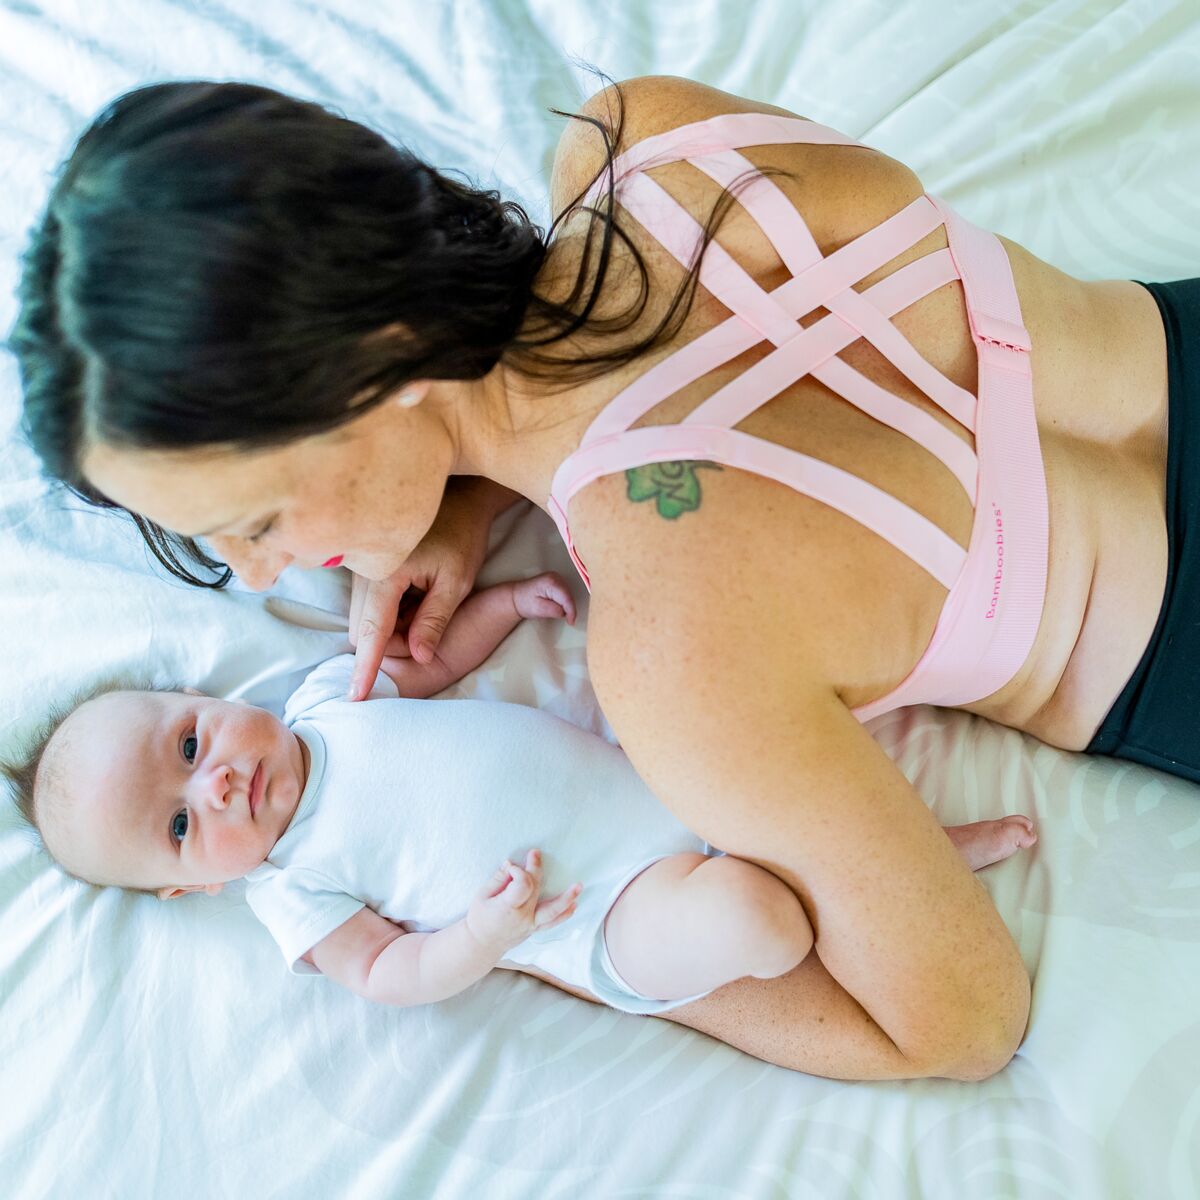 Nursing & Pumping Bra for New Moms - Love & Fit 